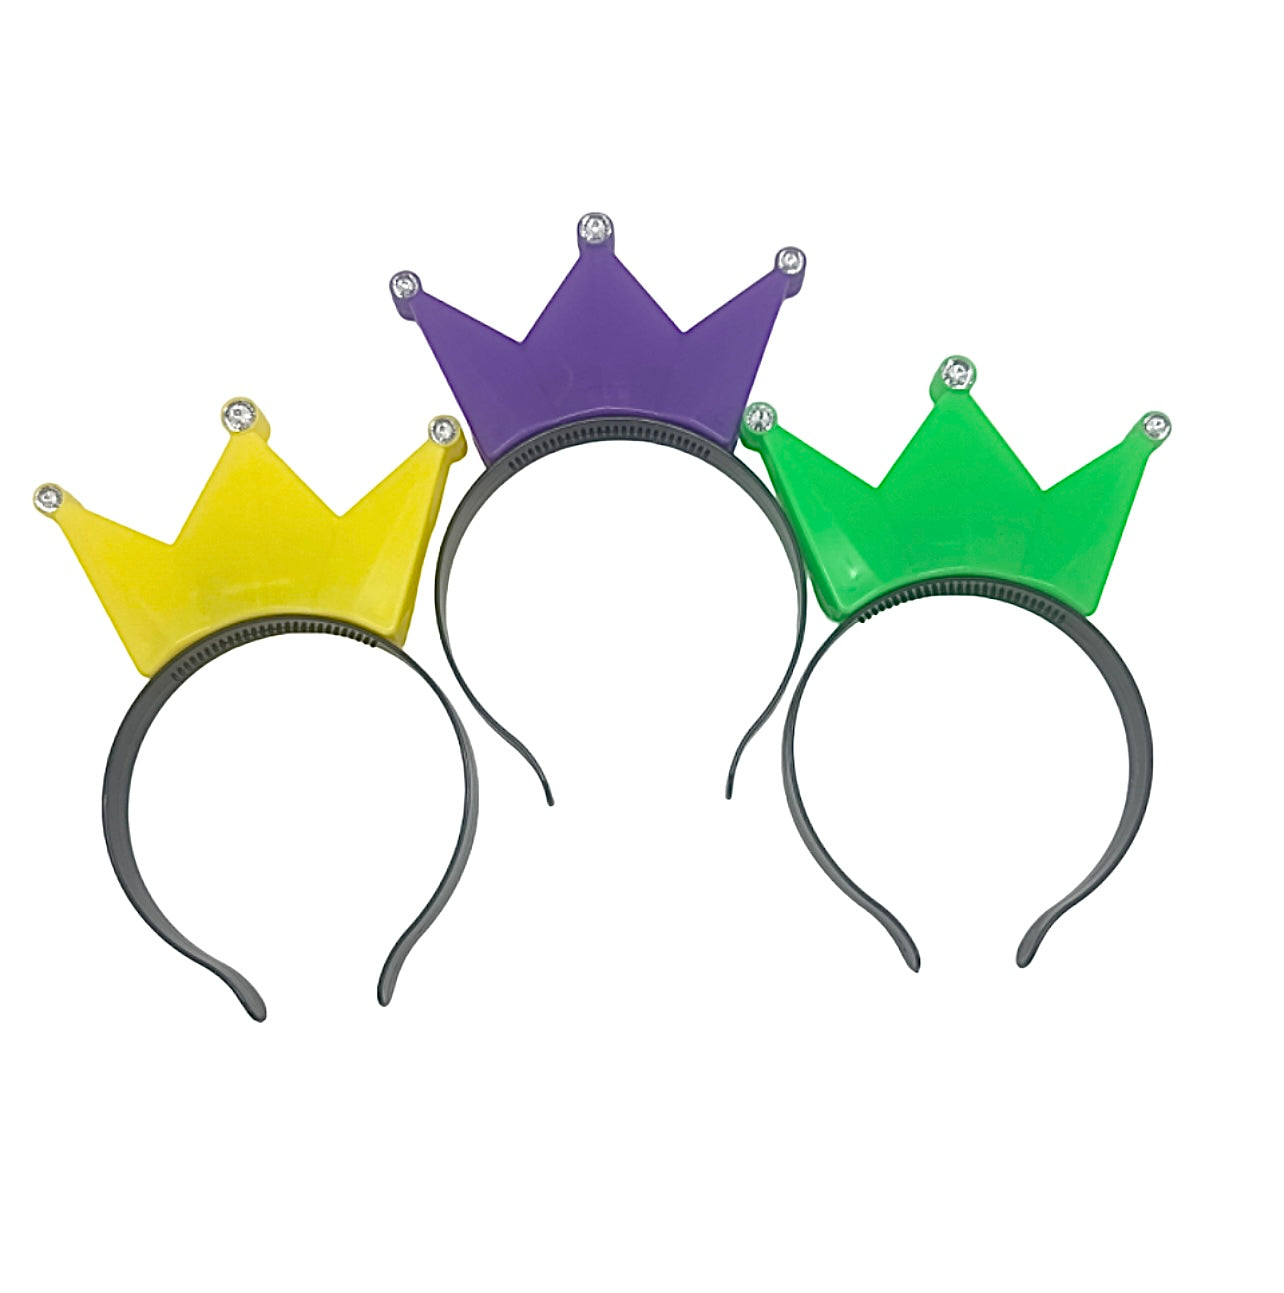 Light Up Crown Headbands - Accessories